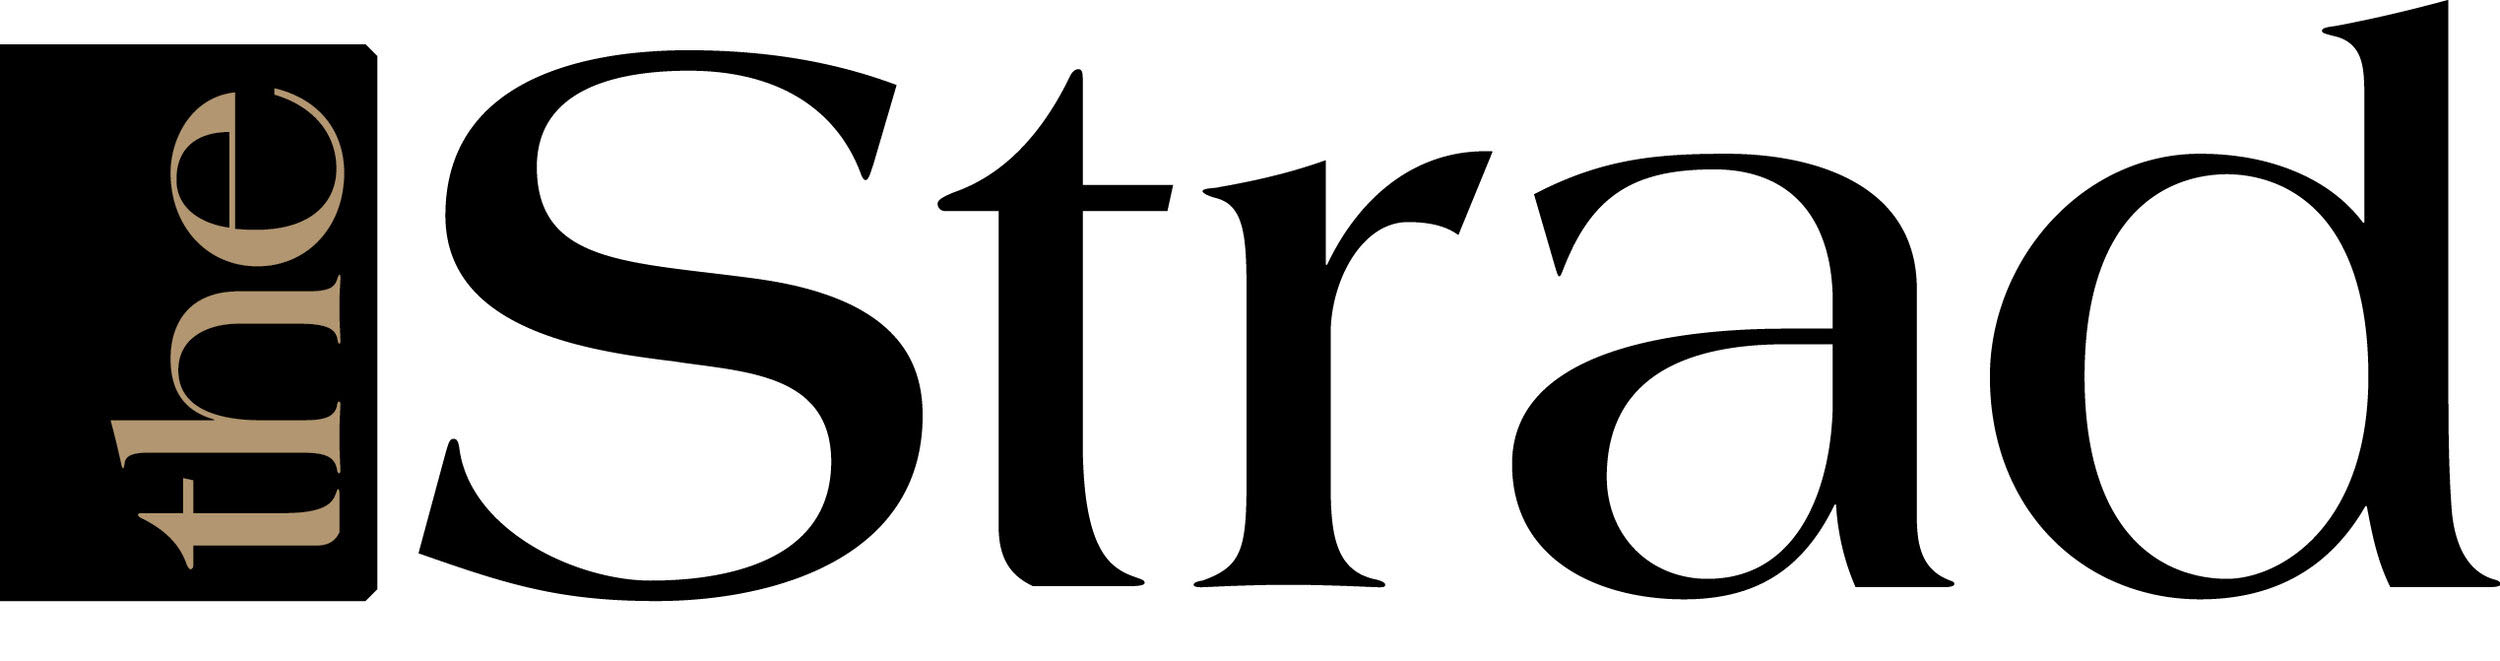 Strad Logo